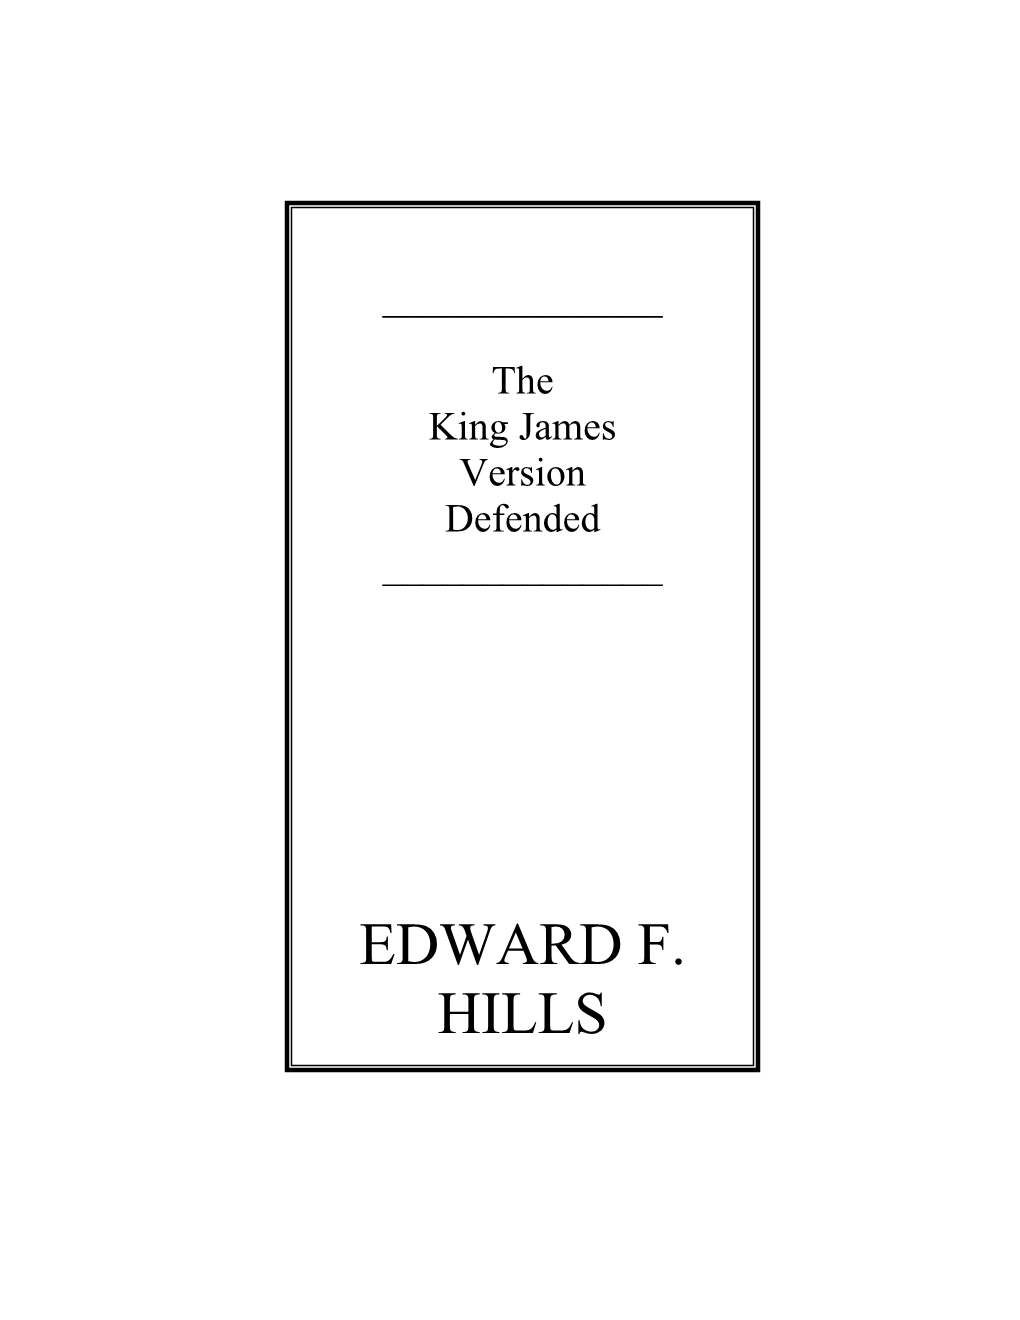 Edward F. Hills Preface